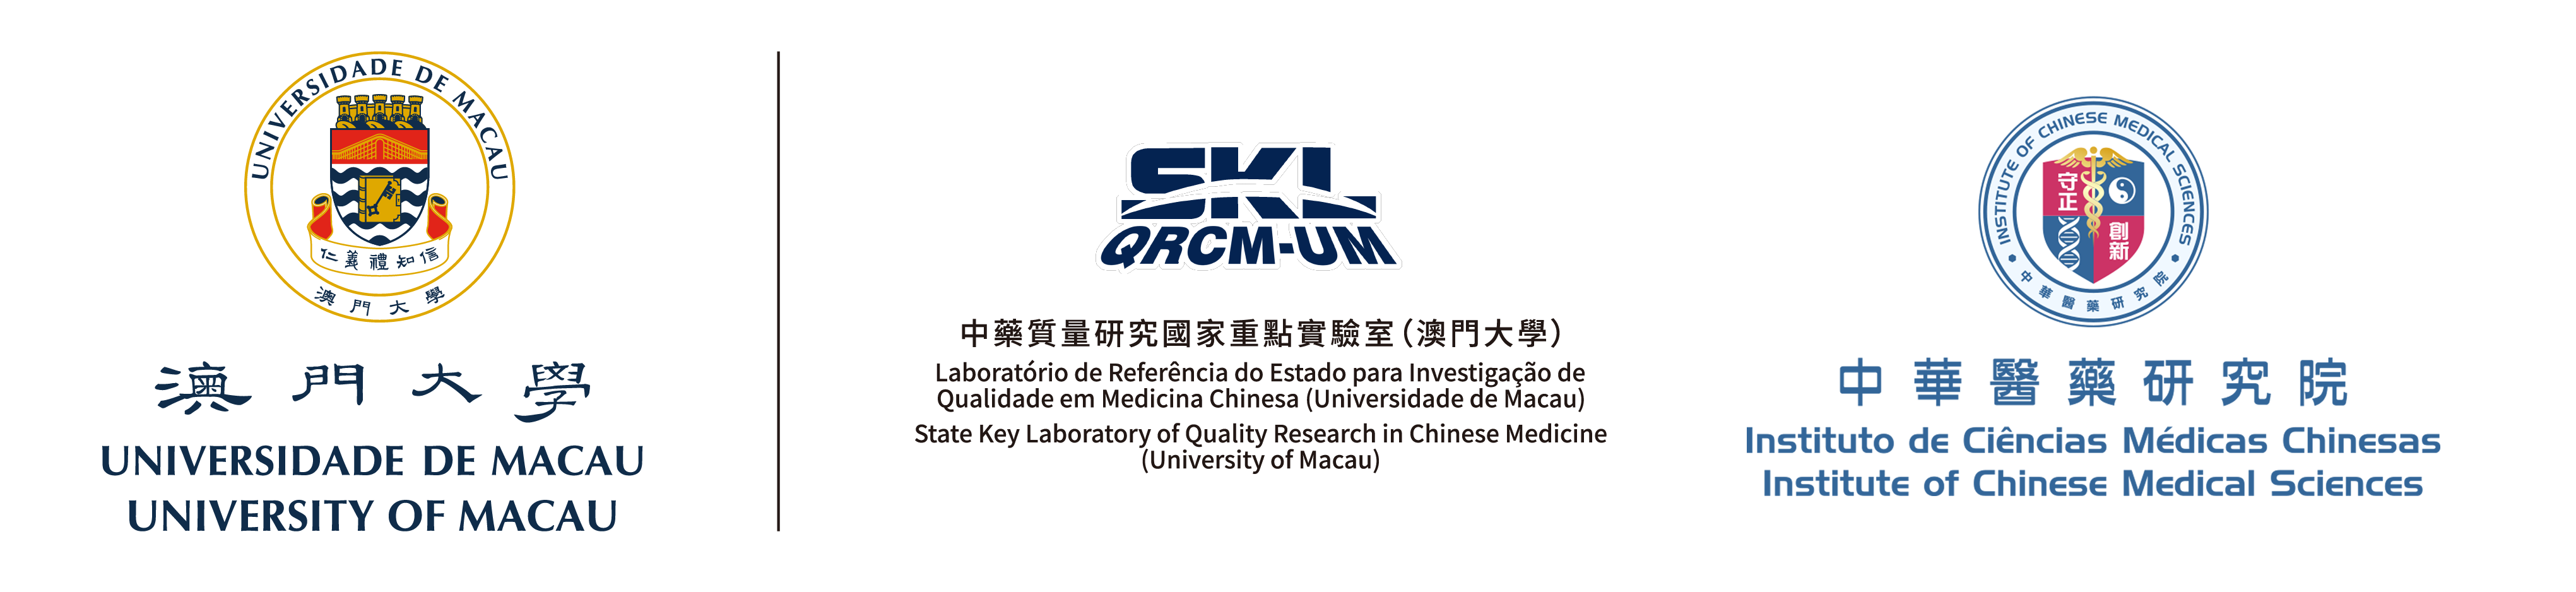 SKL-QRCM | ICMS | University of Macau Logo